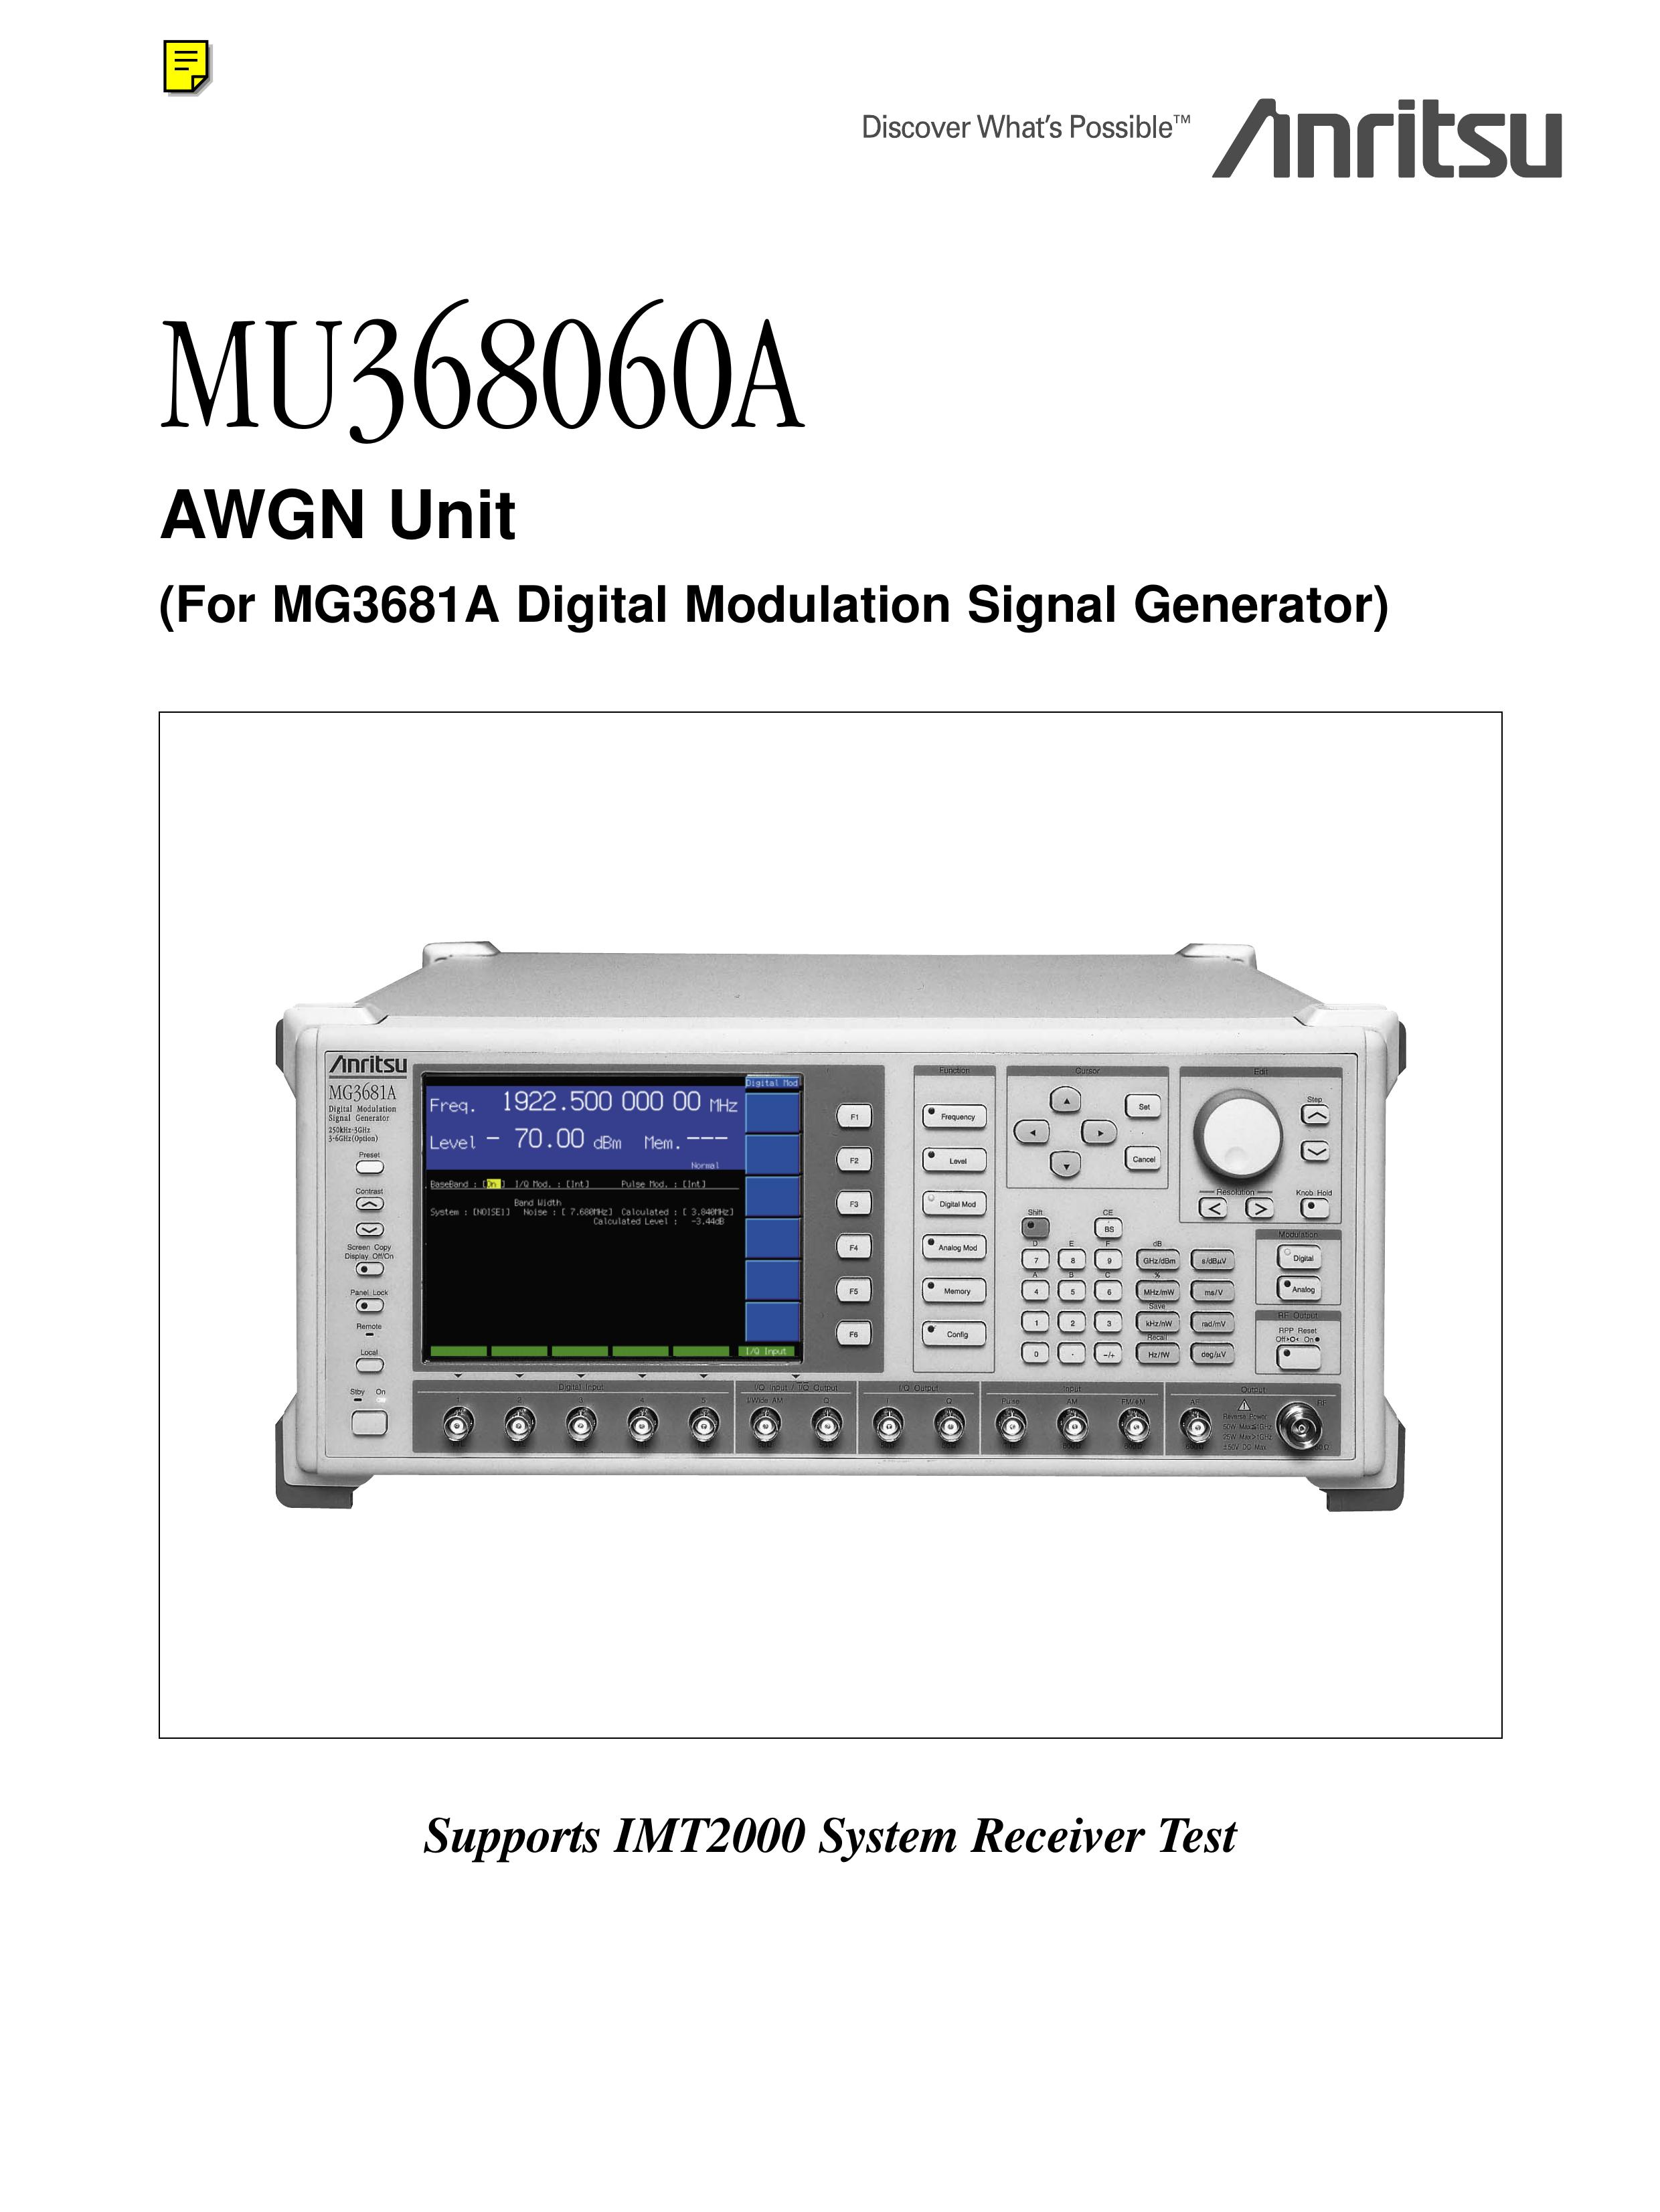 Anritsu MU368060A Portable Generator User Manual